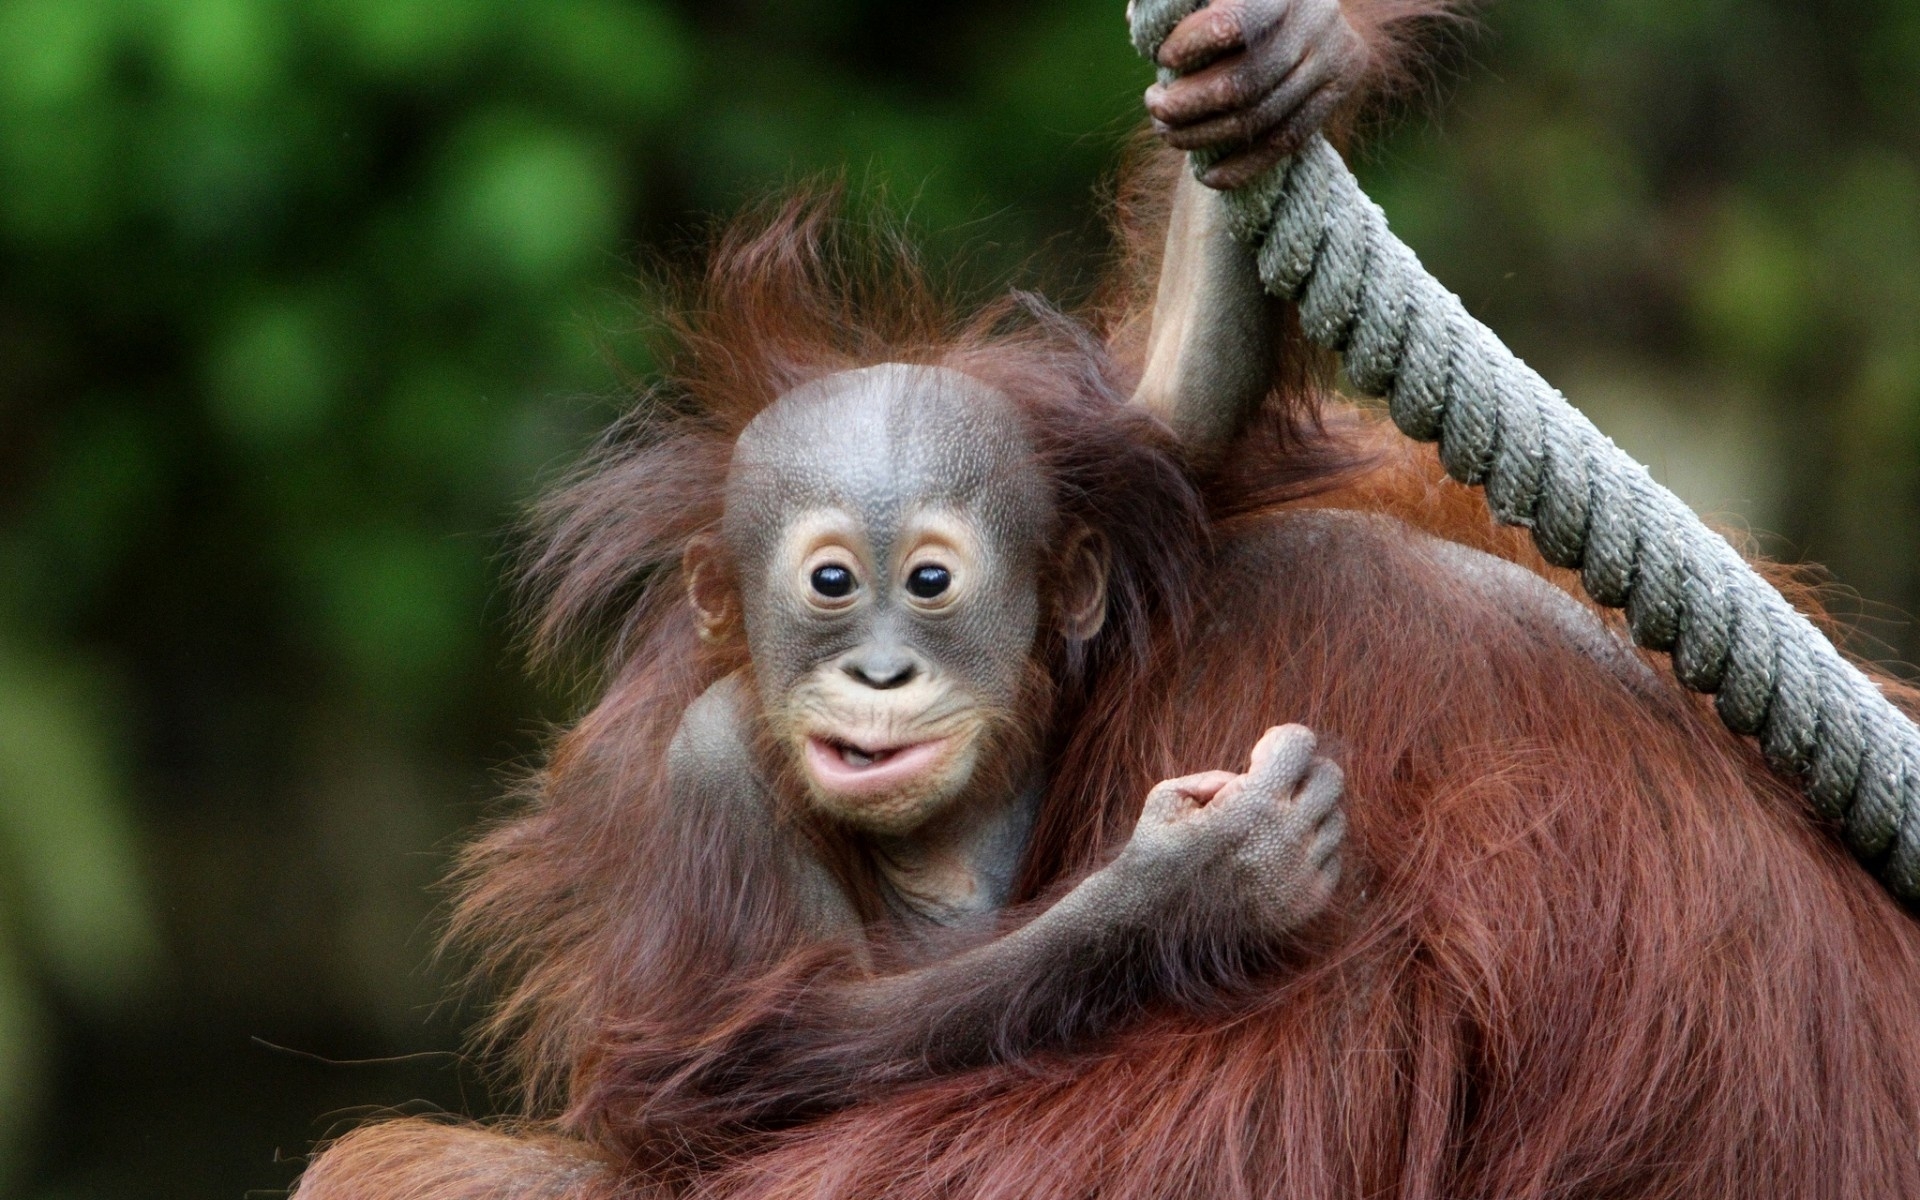 Wallpaper face eyes wildlife baby monkey orangutan fauna mammal vertebrate great ape primate x